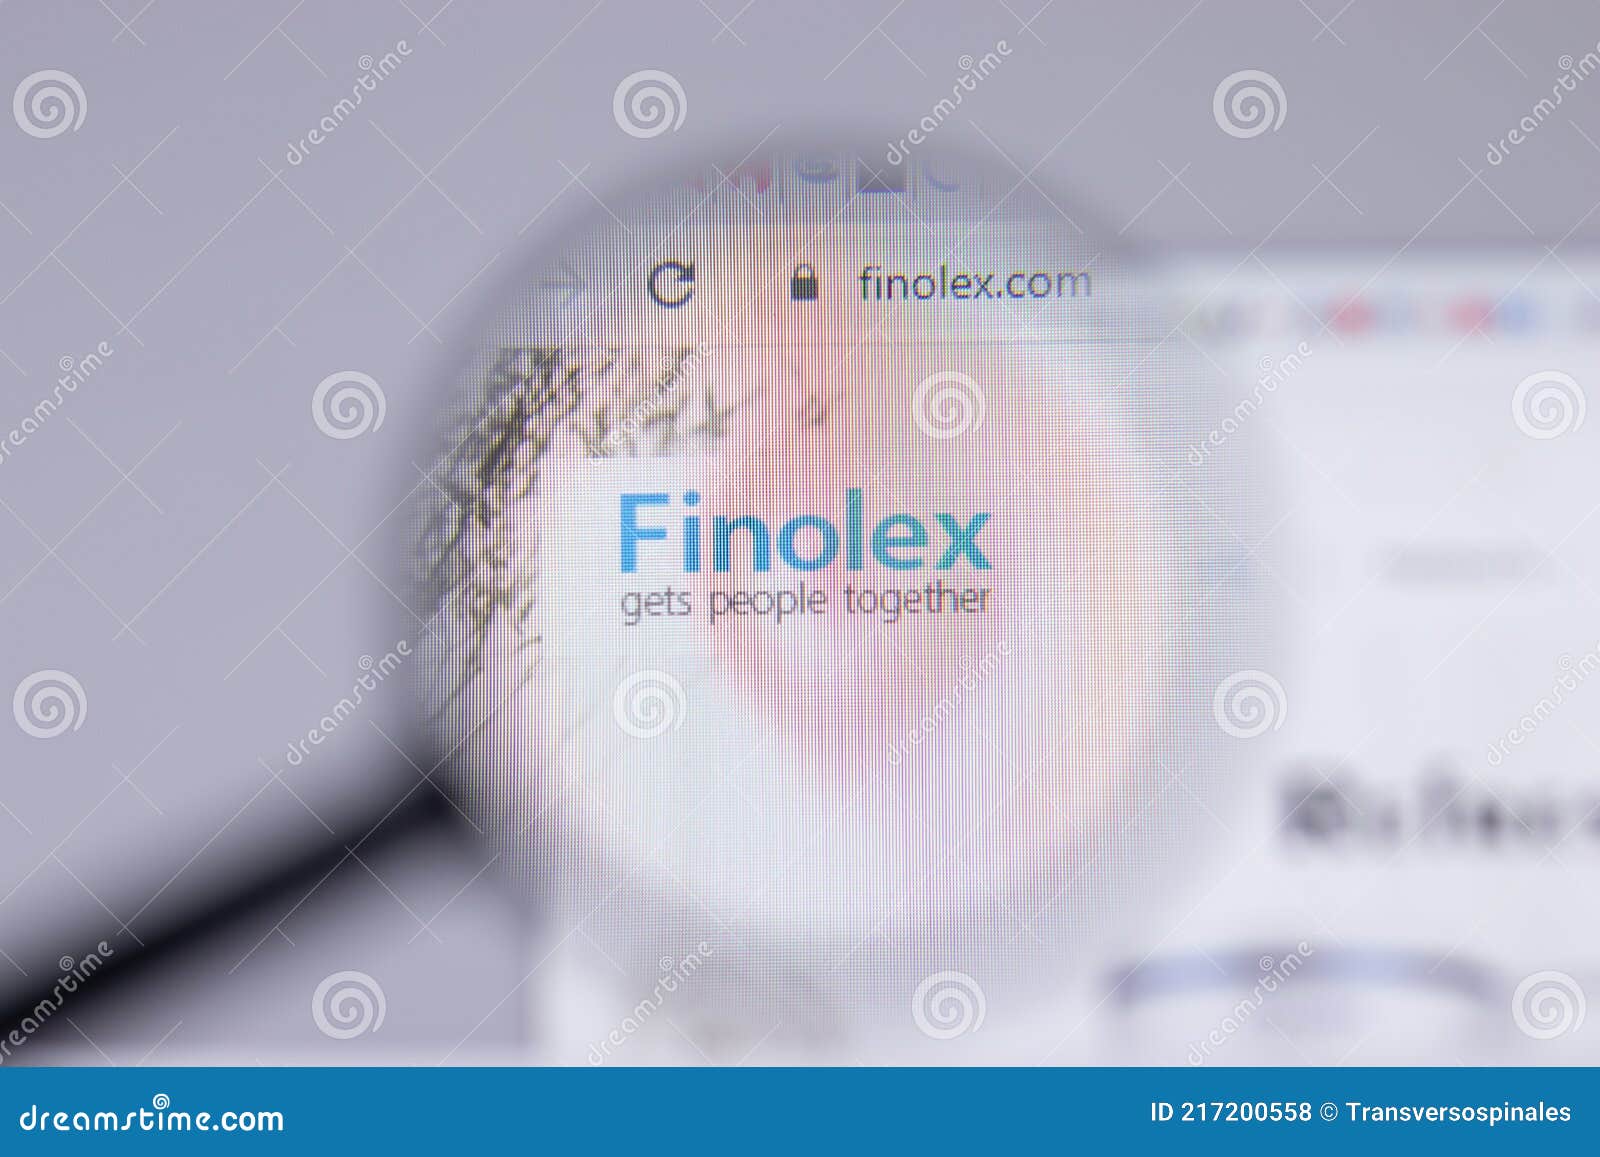 Finolex Cables q4 Results 2023 | finolex Cables share latest news | finolex  Cables share | finolex - YouTube